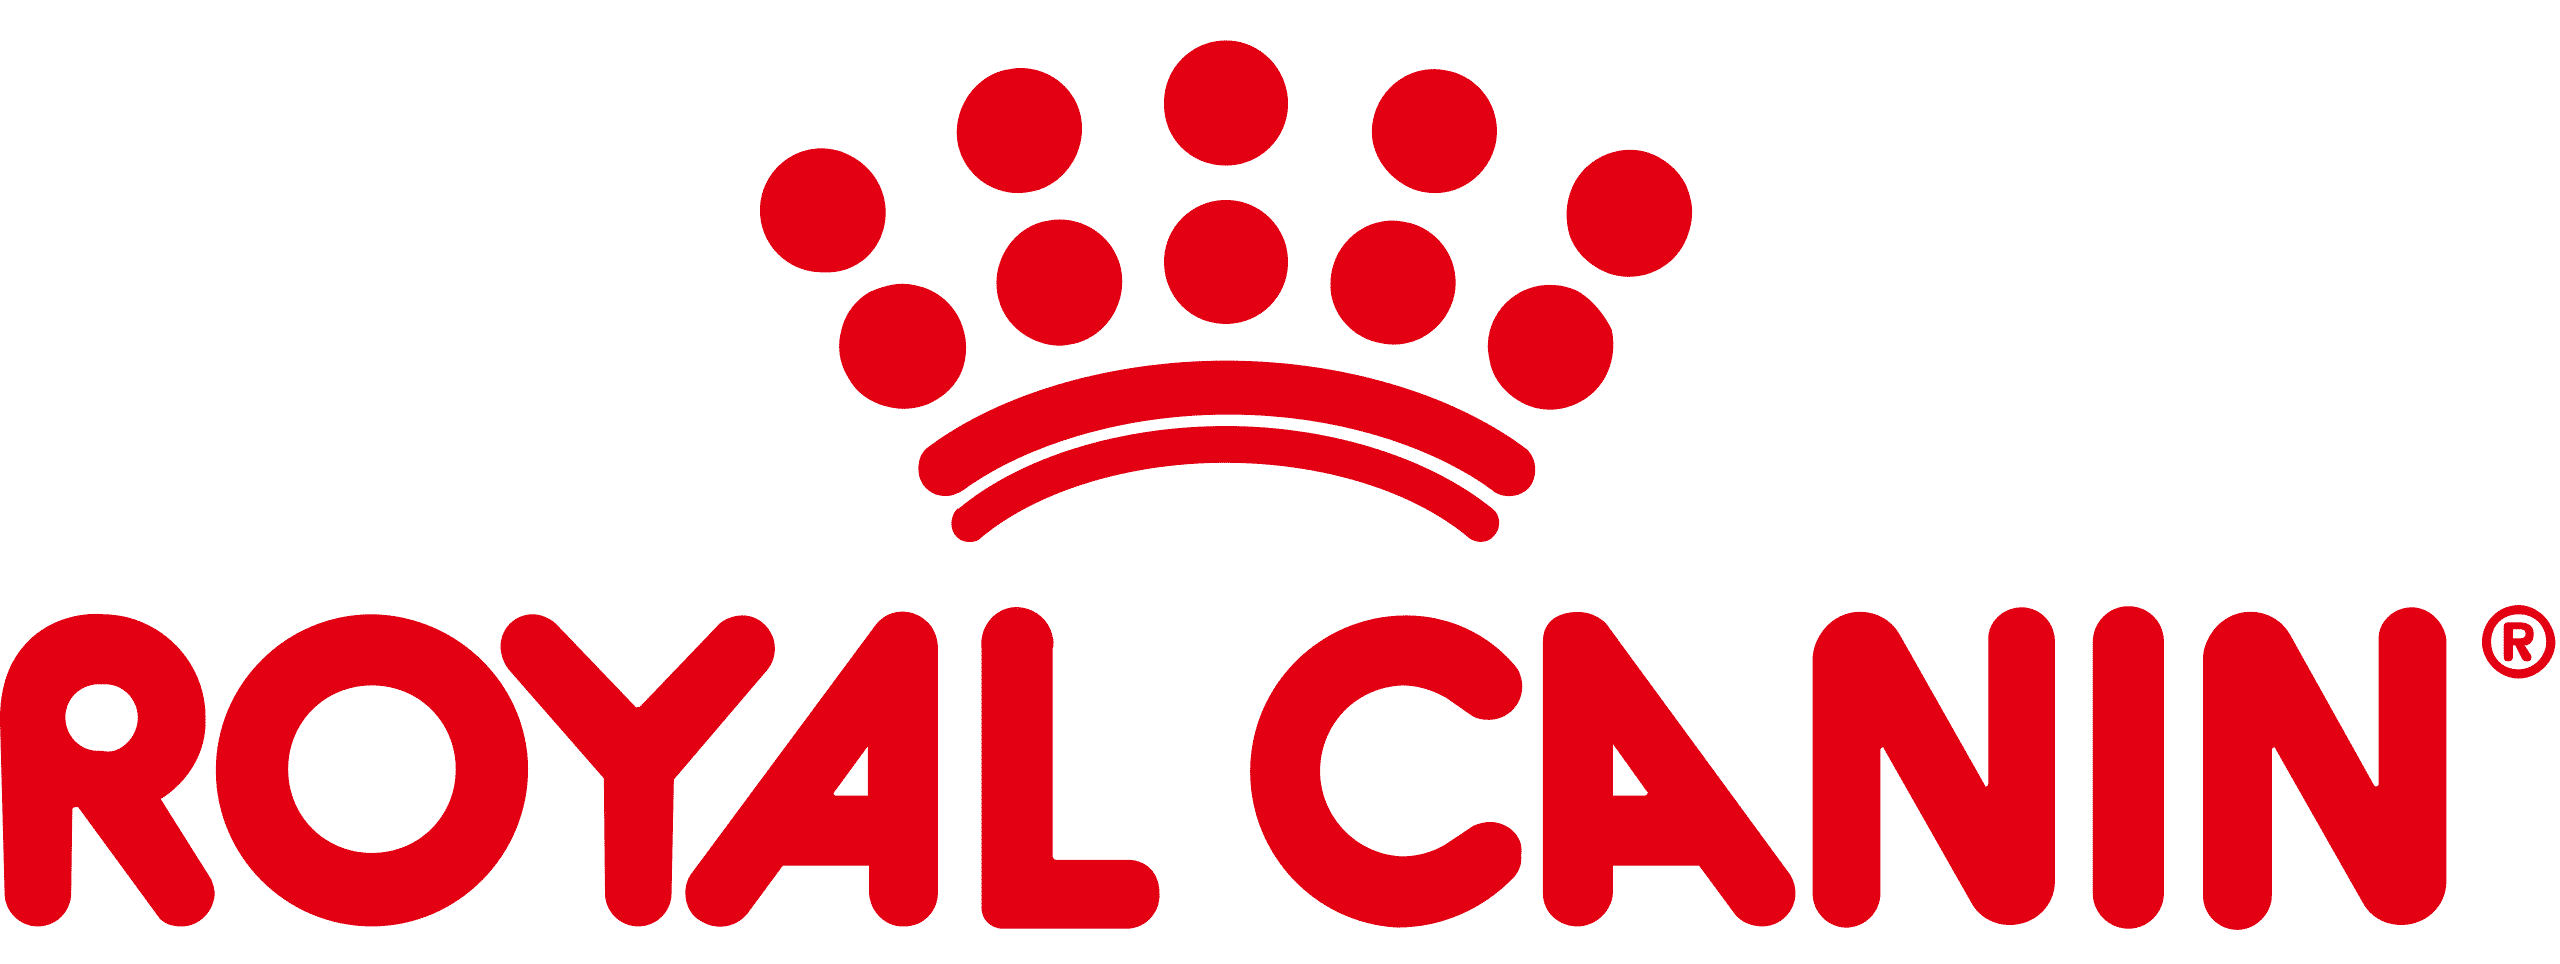 Royal-Canin-Logo.svg